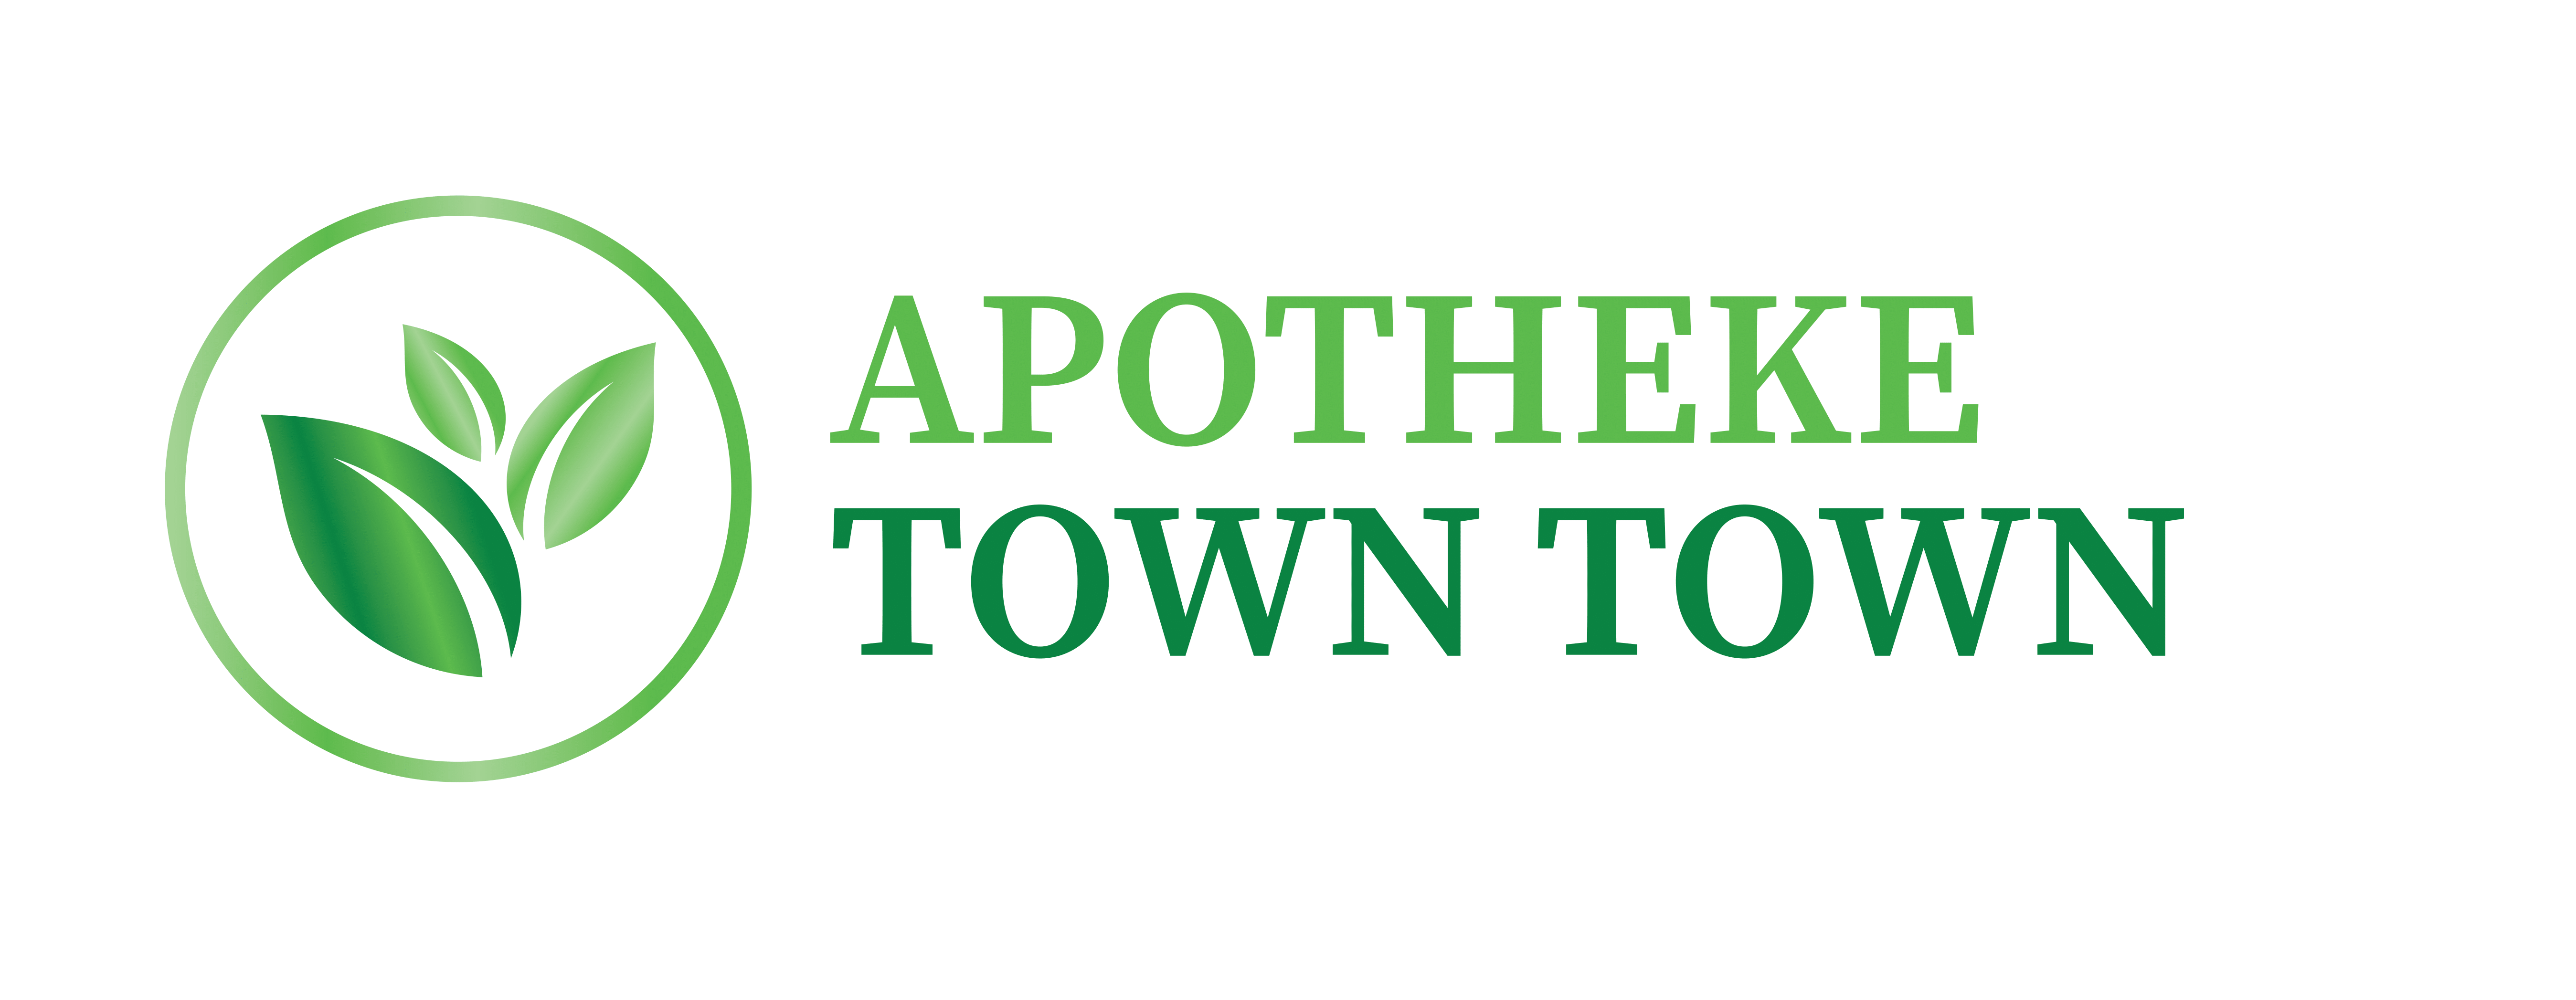 Town Town Apotheke